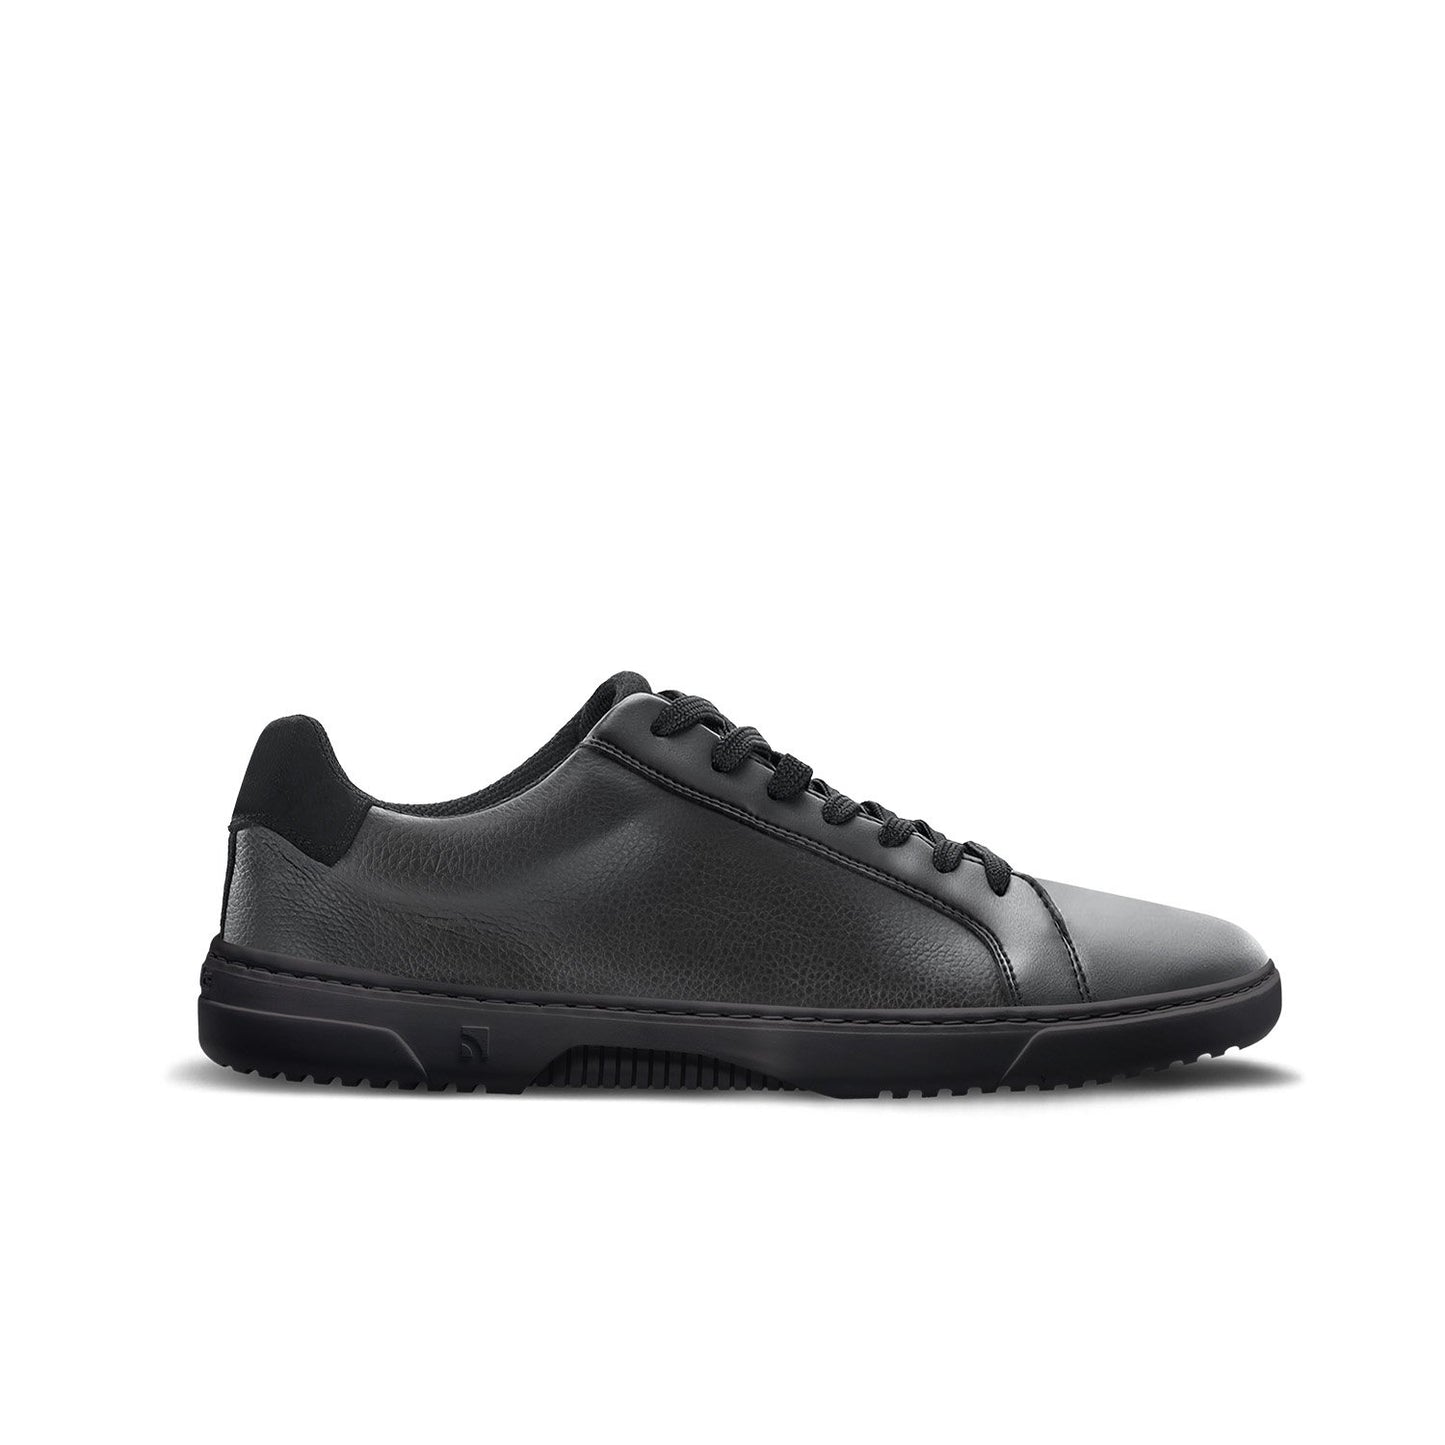 Barebarics Zoom Barefoot Sneakers - All Black